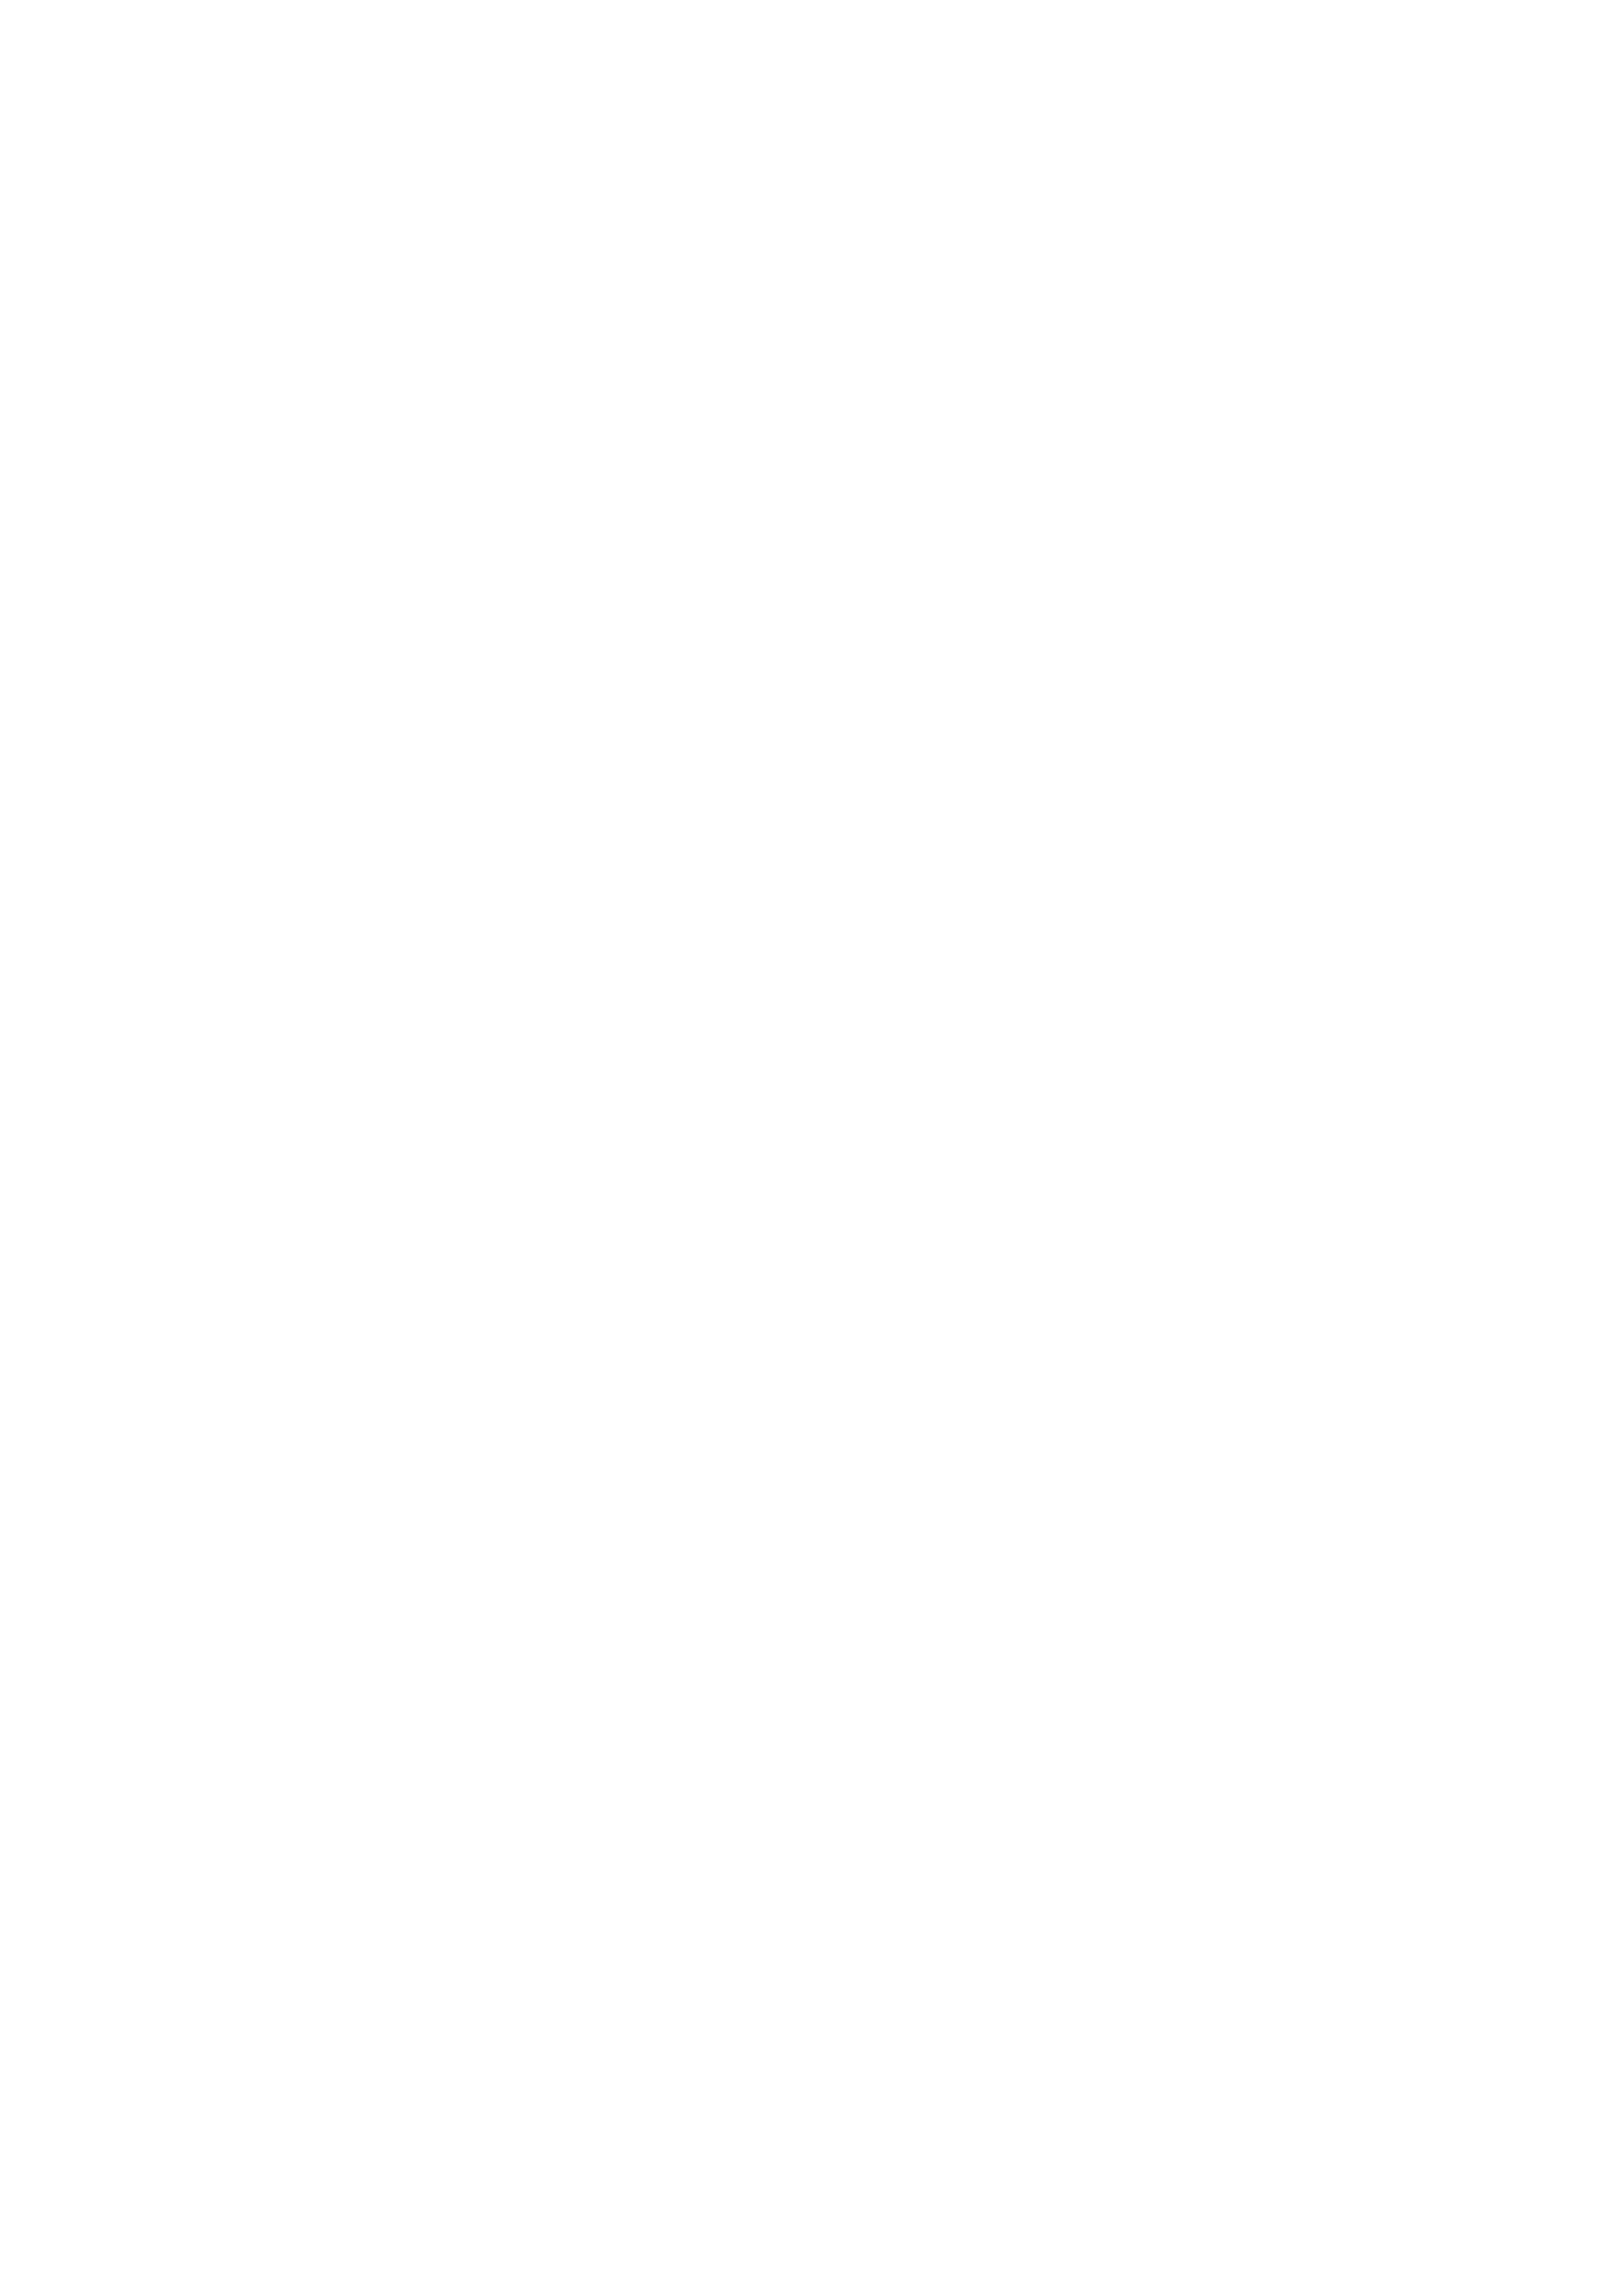 Battalash Makeup Artistry